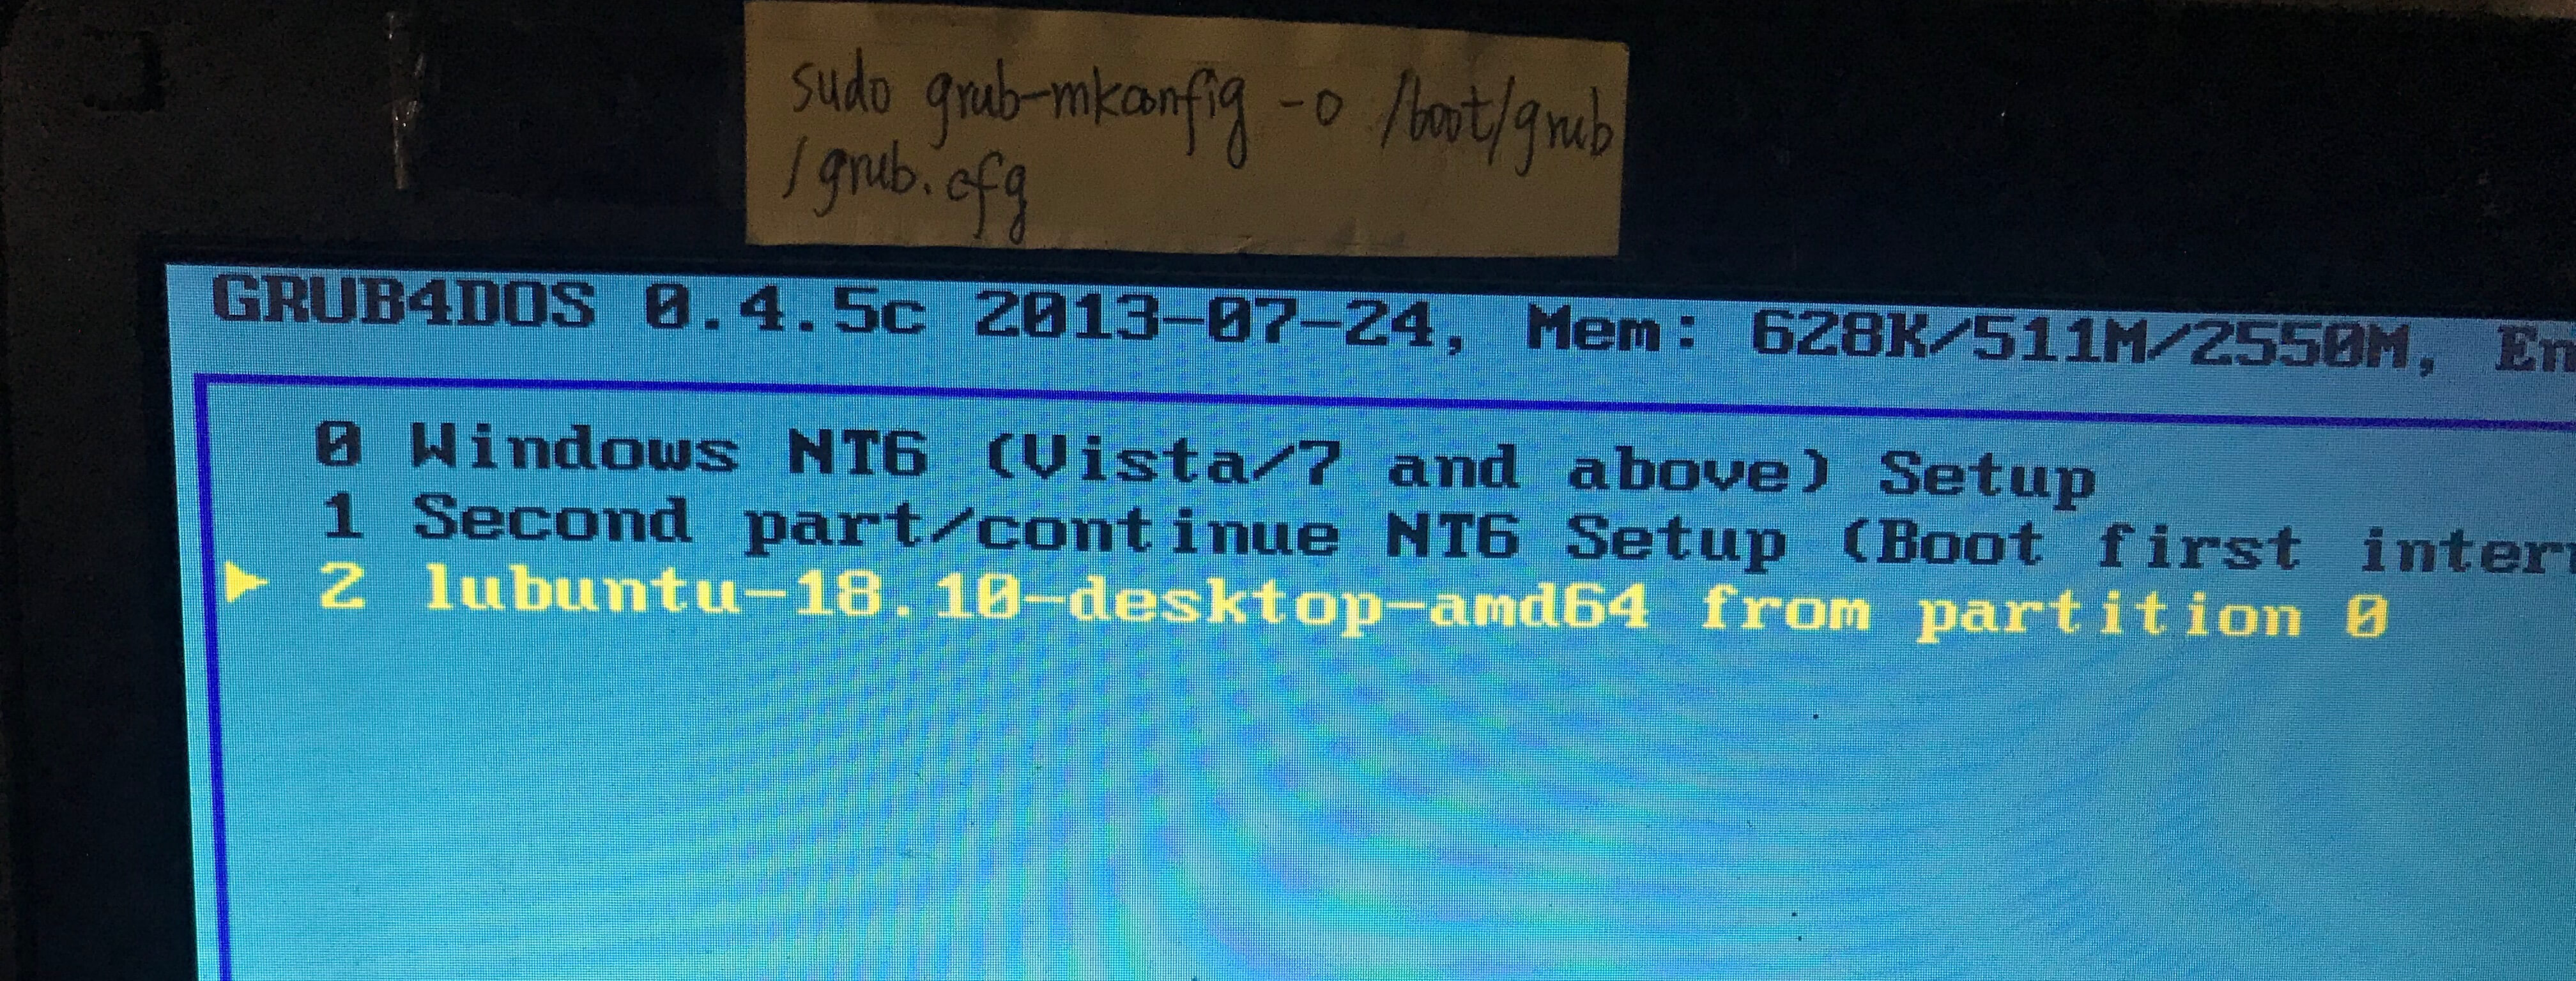 multiboot USB grub4dos